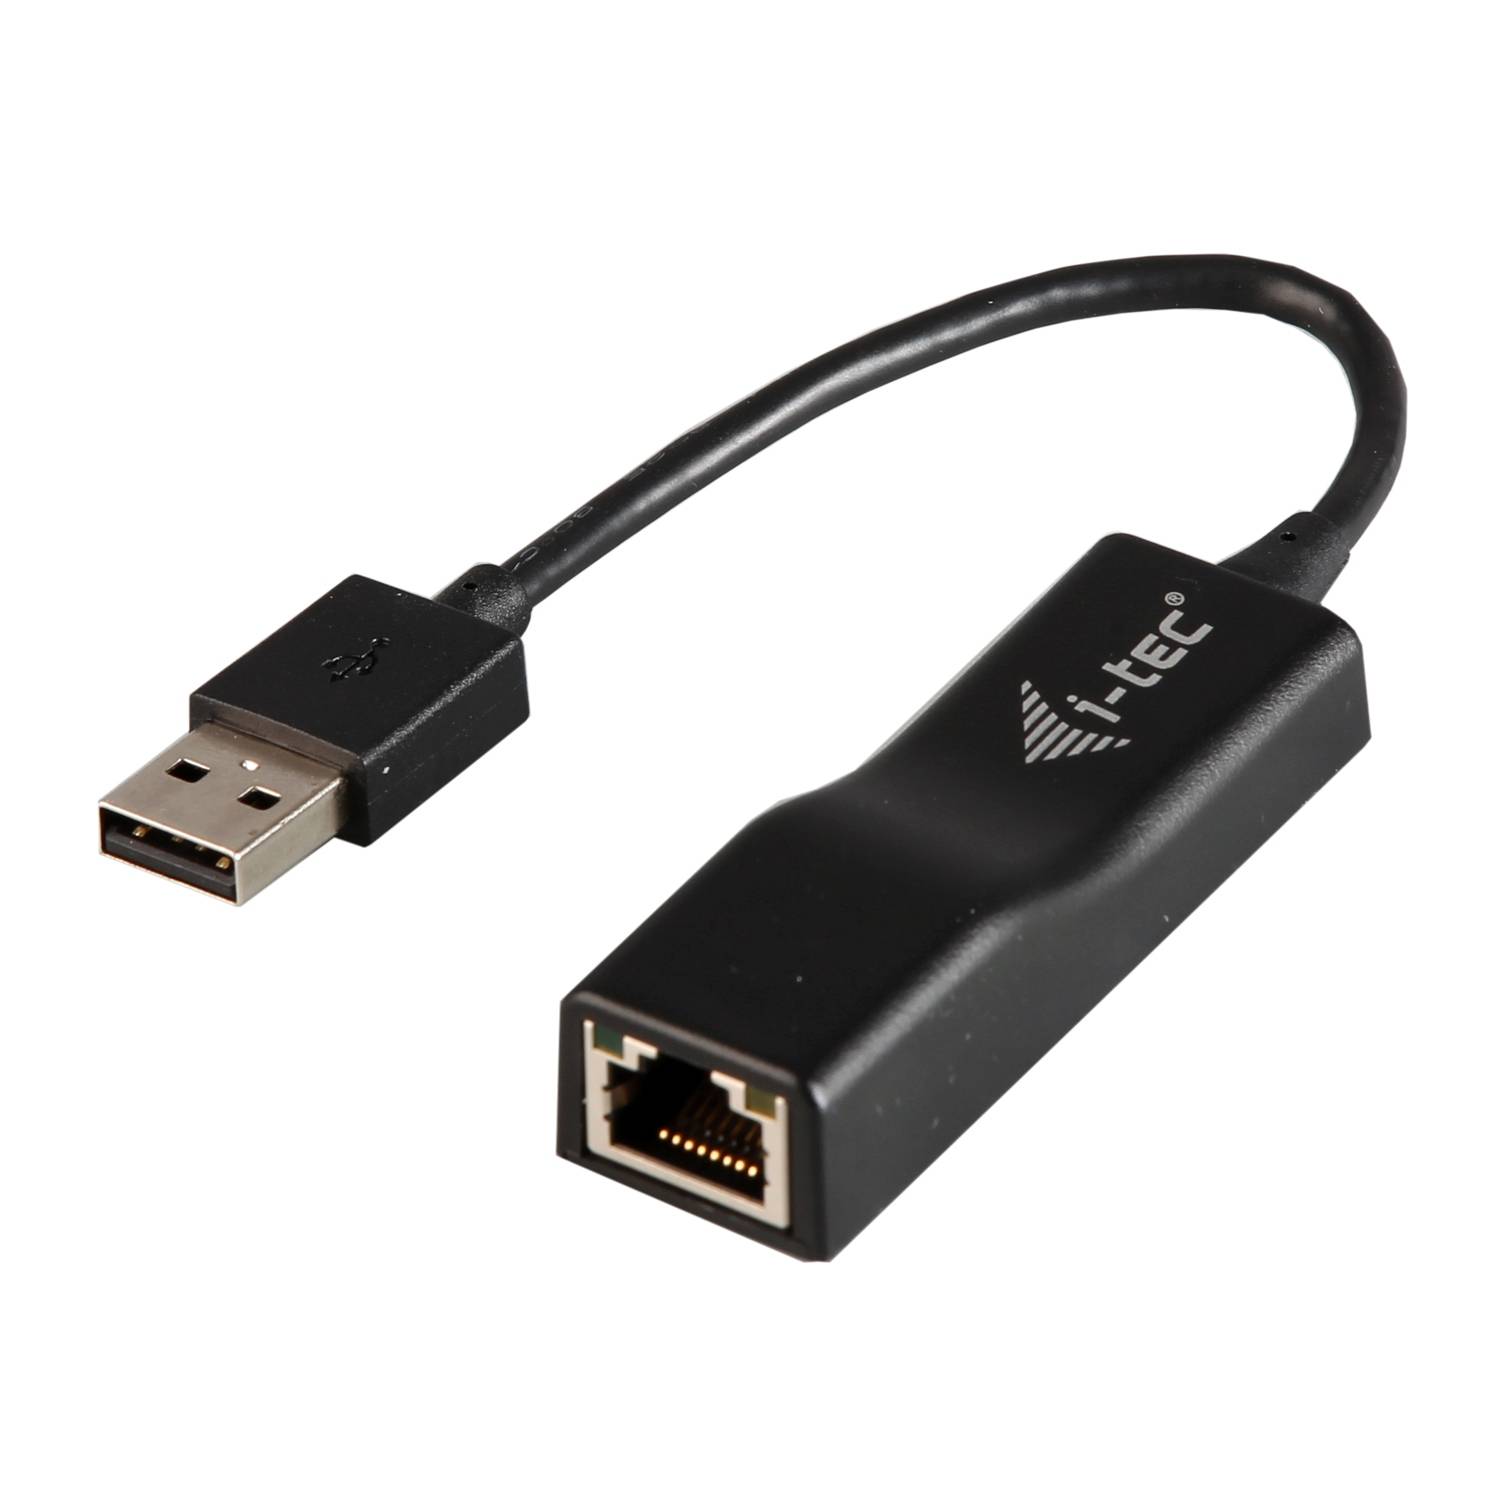 Rca Informatique - Image du produit : I-TEC USB 2.0 NETWORK ADAPTER ADVANCE 10/100 USB 2.0 TO RJ45